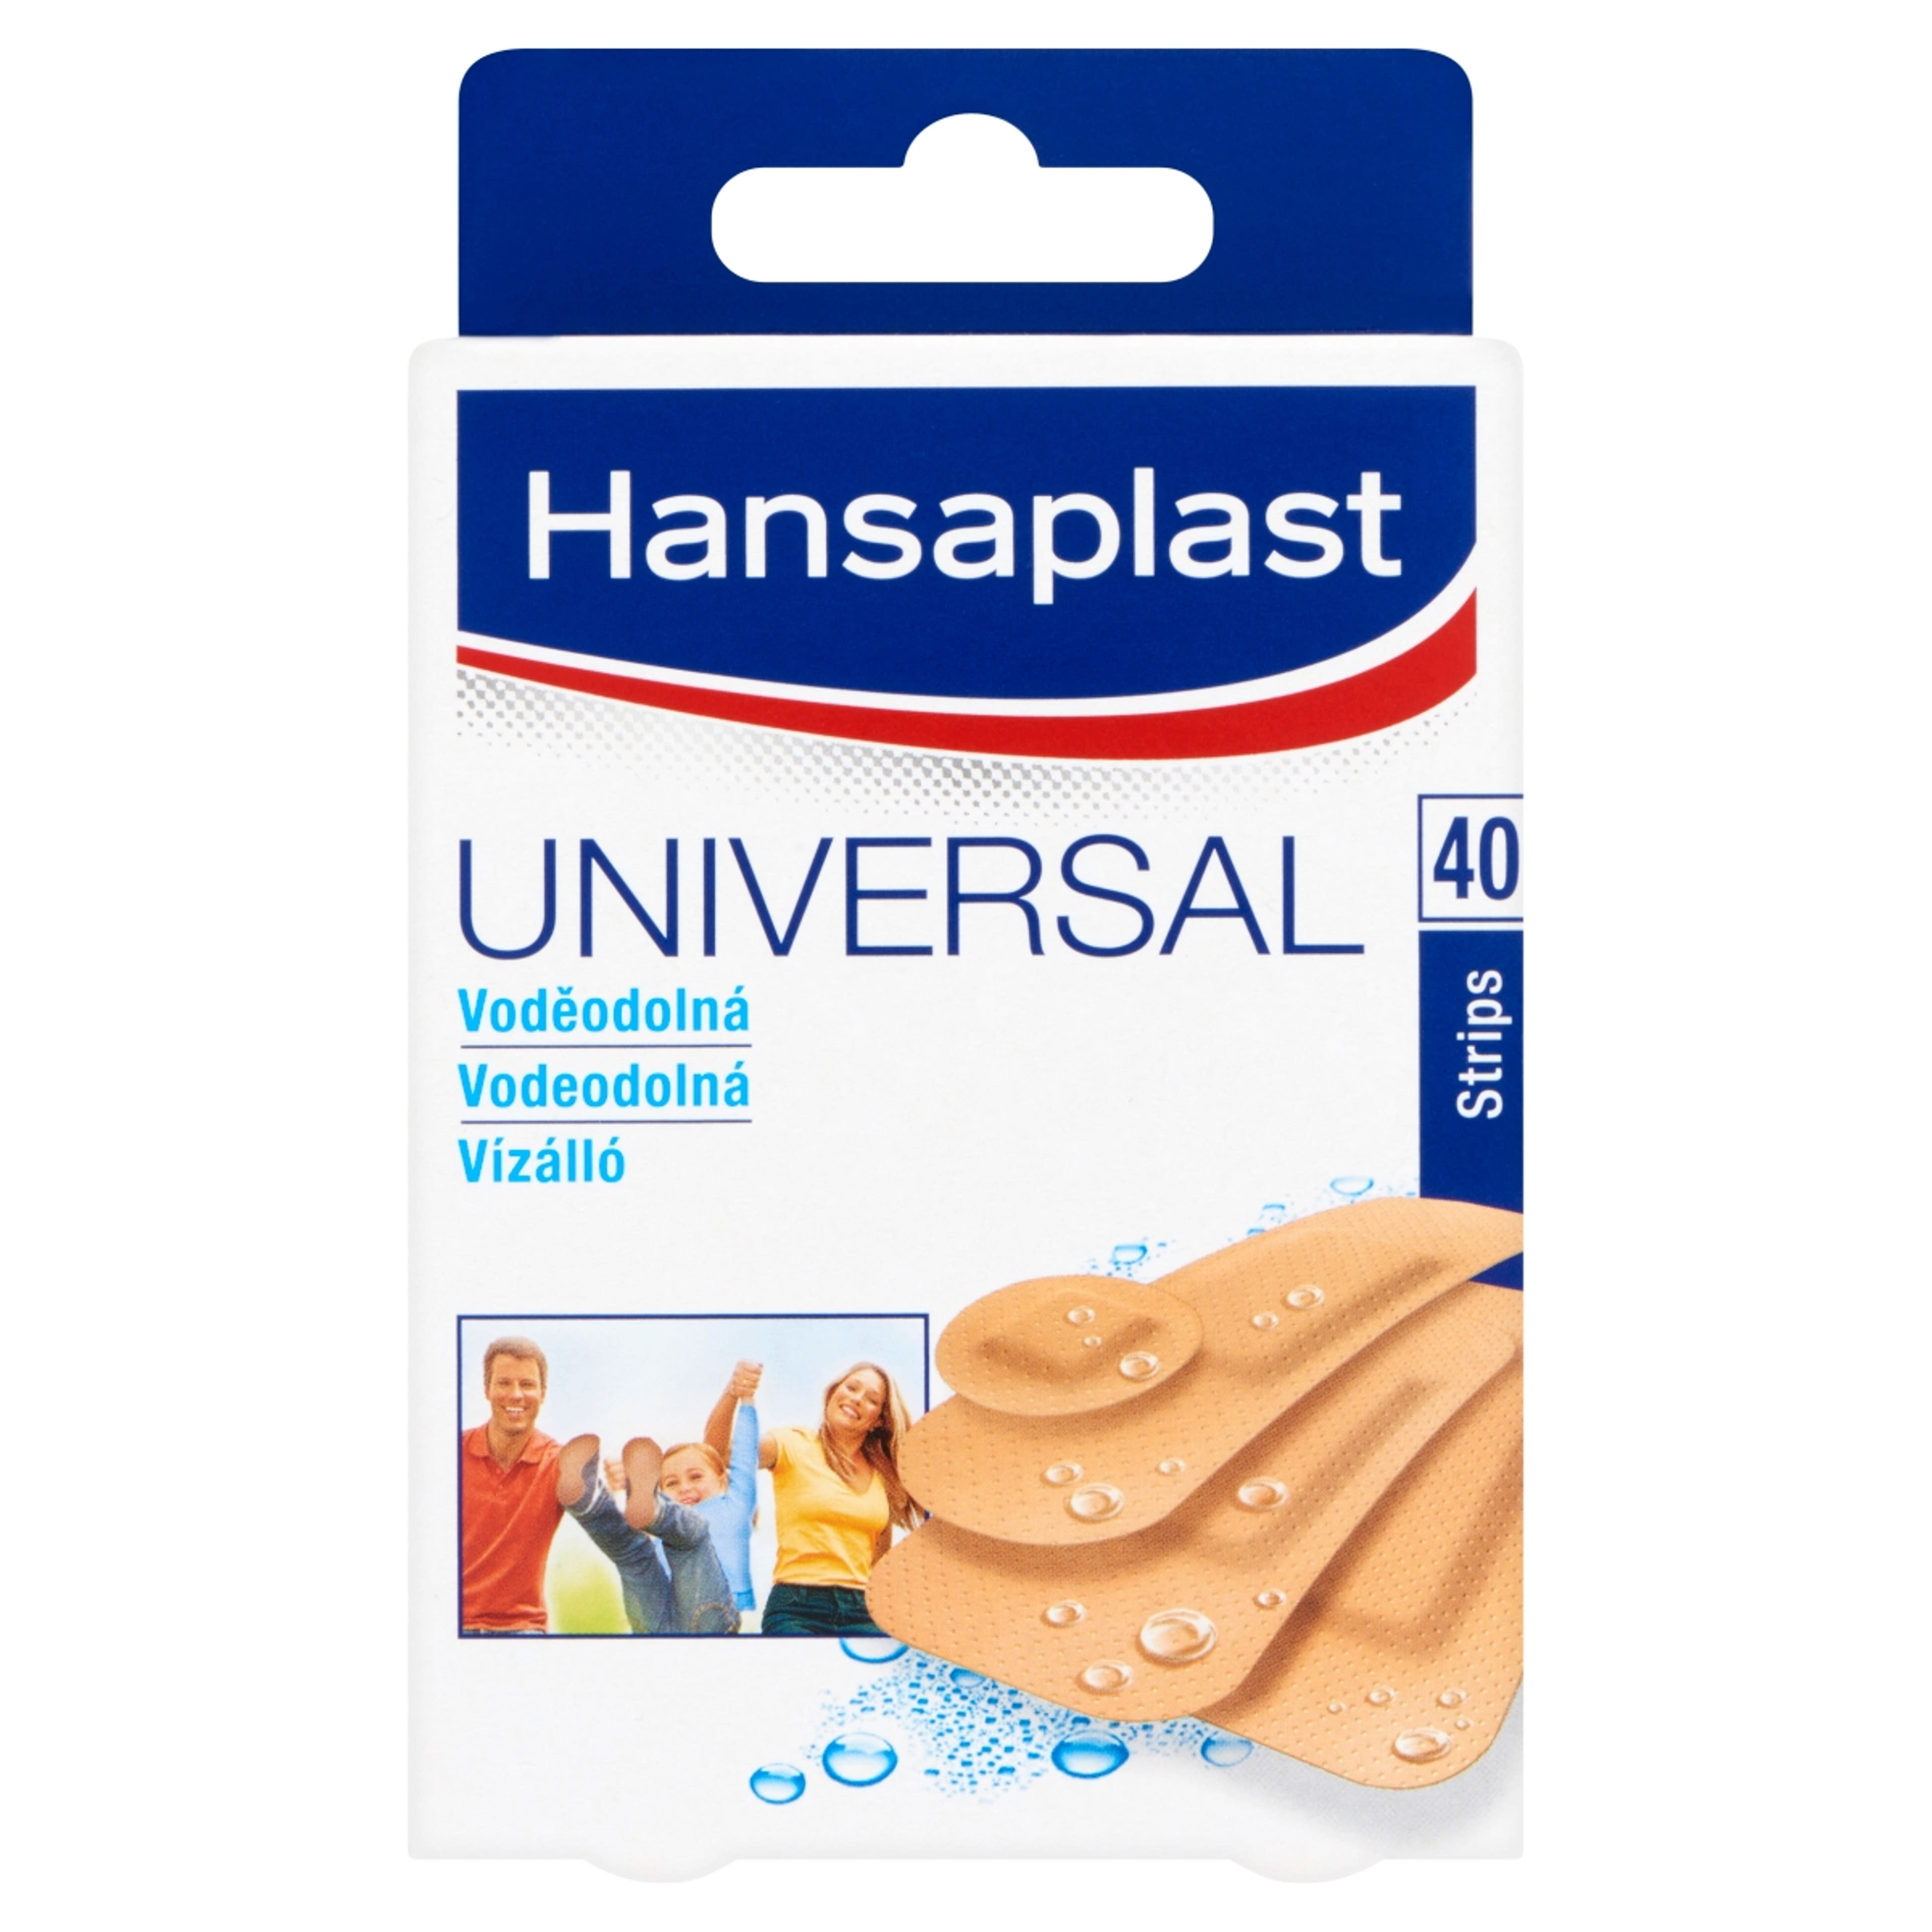 Hansaplast Universal - 40 db-1